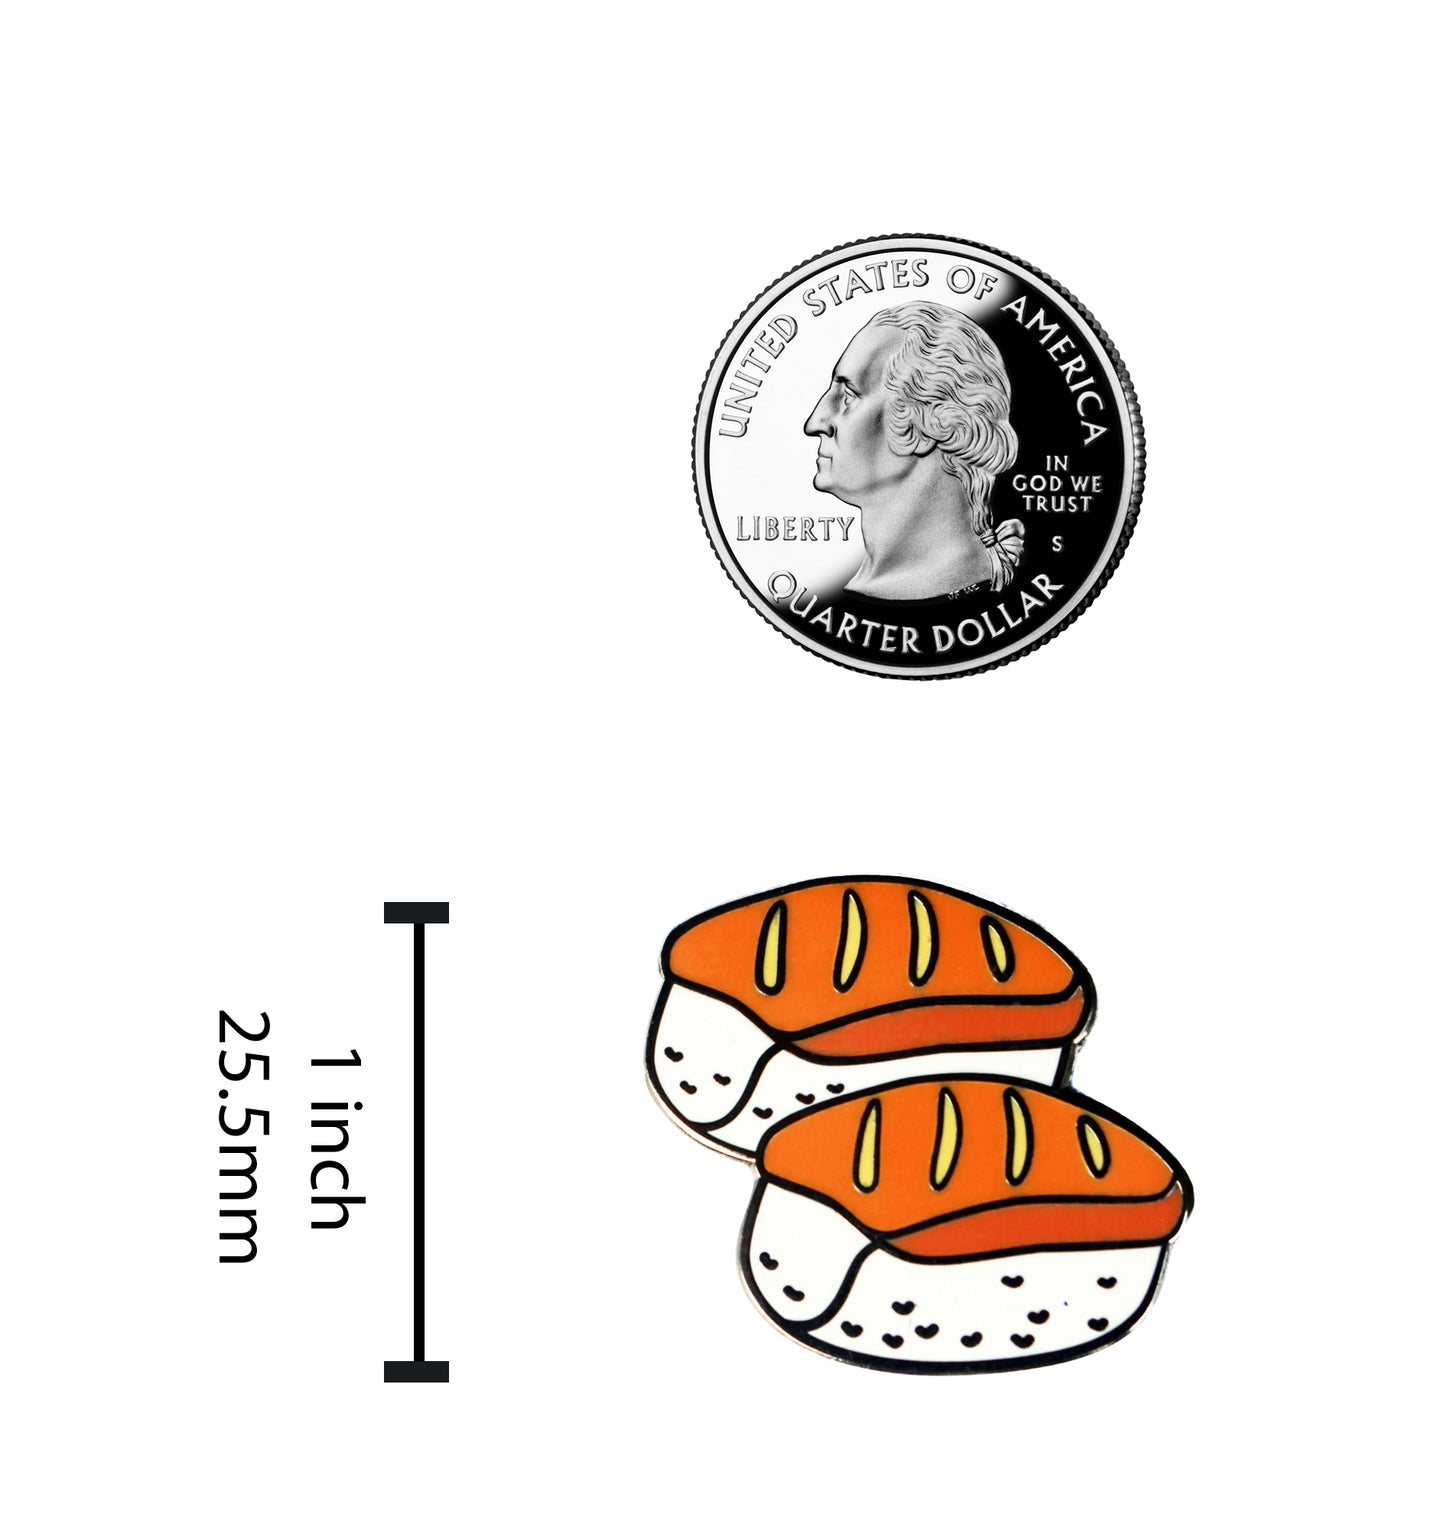 Sushi Emoji – Enamel Pin for your Life